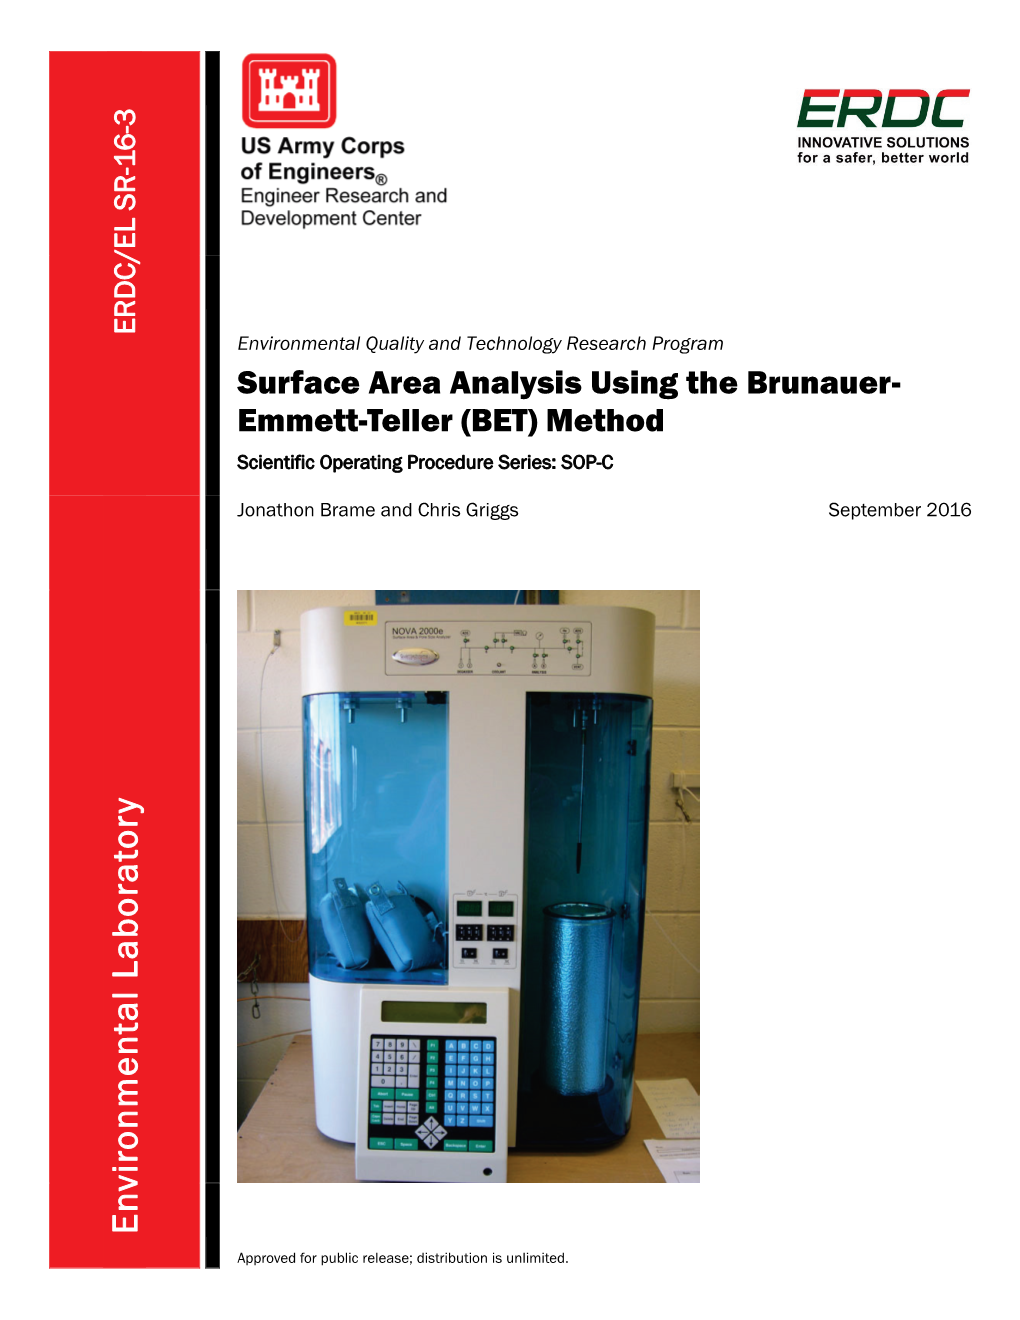 Surface Area Analysis Using the Brunauer-Emmett-Teller (BET) Method: Standard Operat- Ing Procedure Series: Characterization (C) 5B